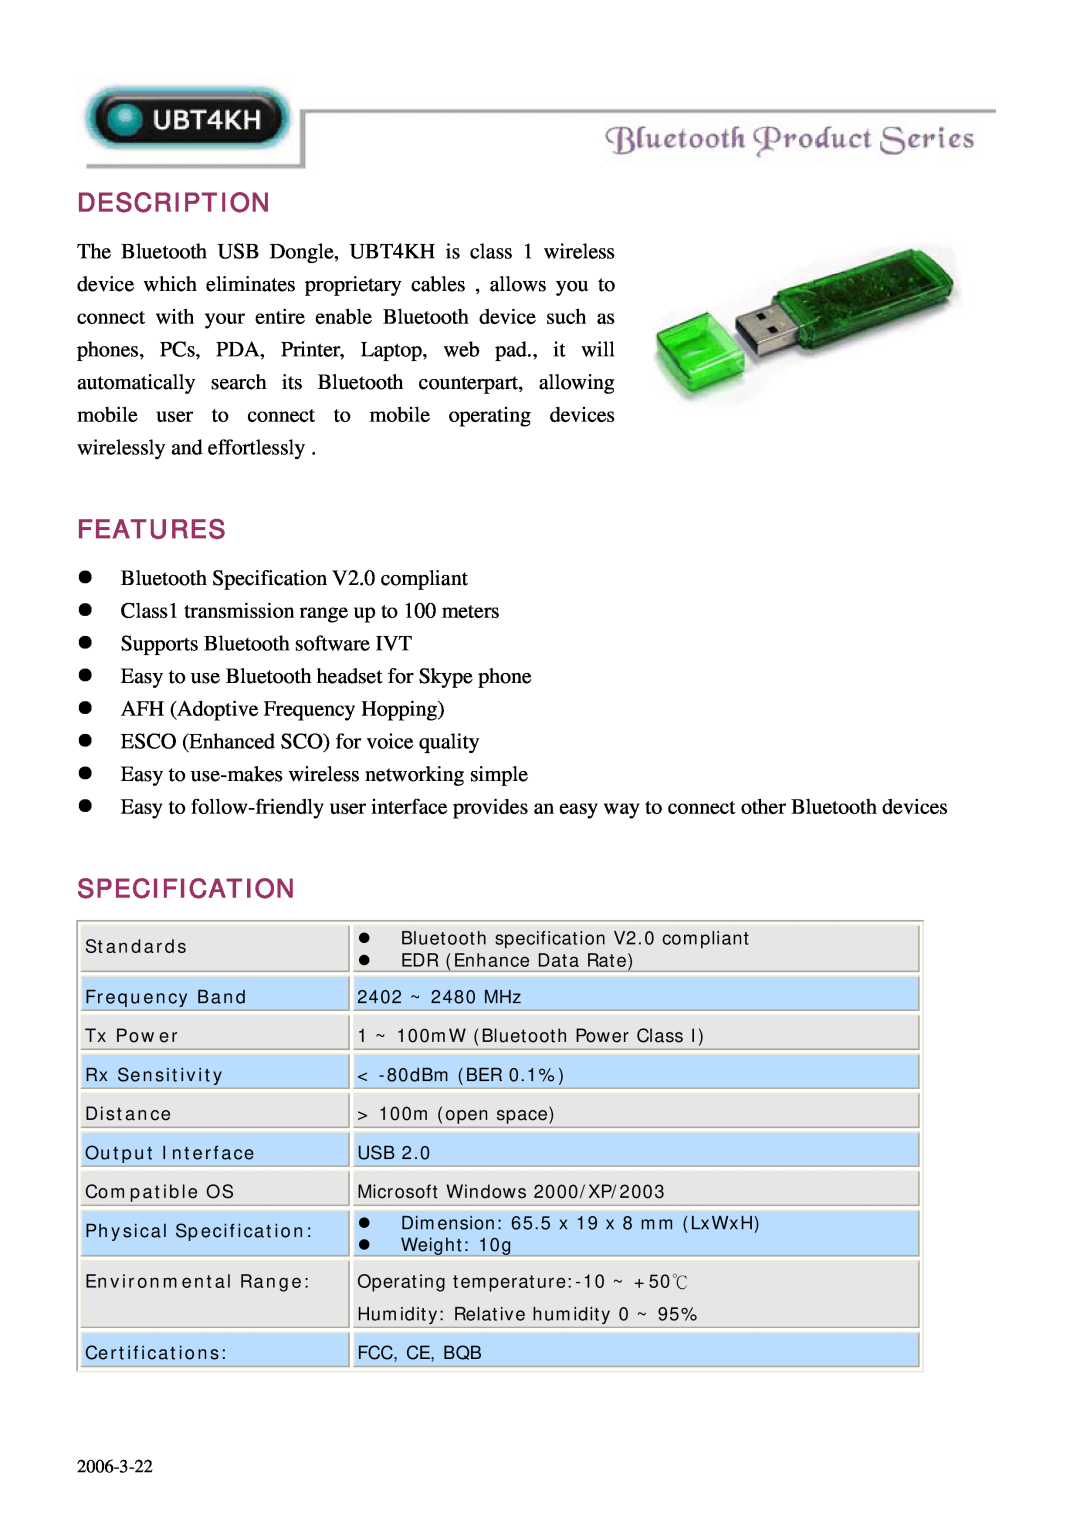 Abocom UBT4KH specifications Description, Features, Specification 